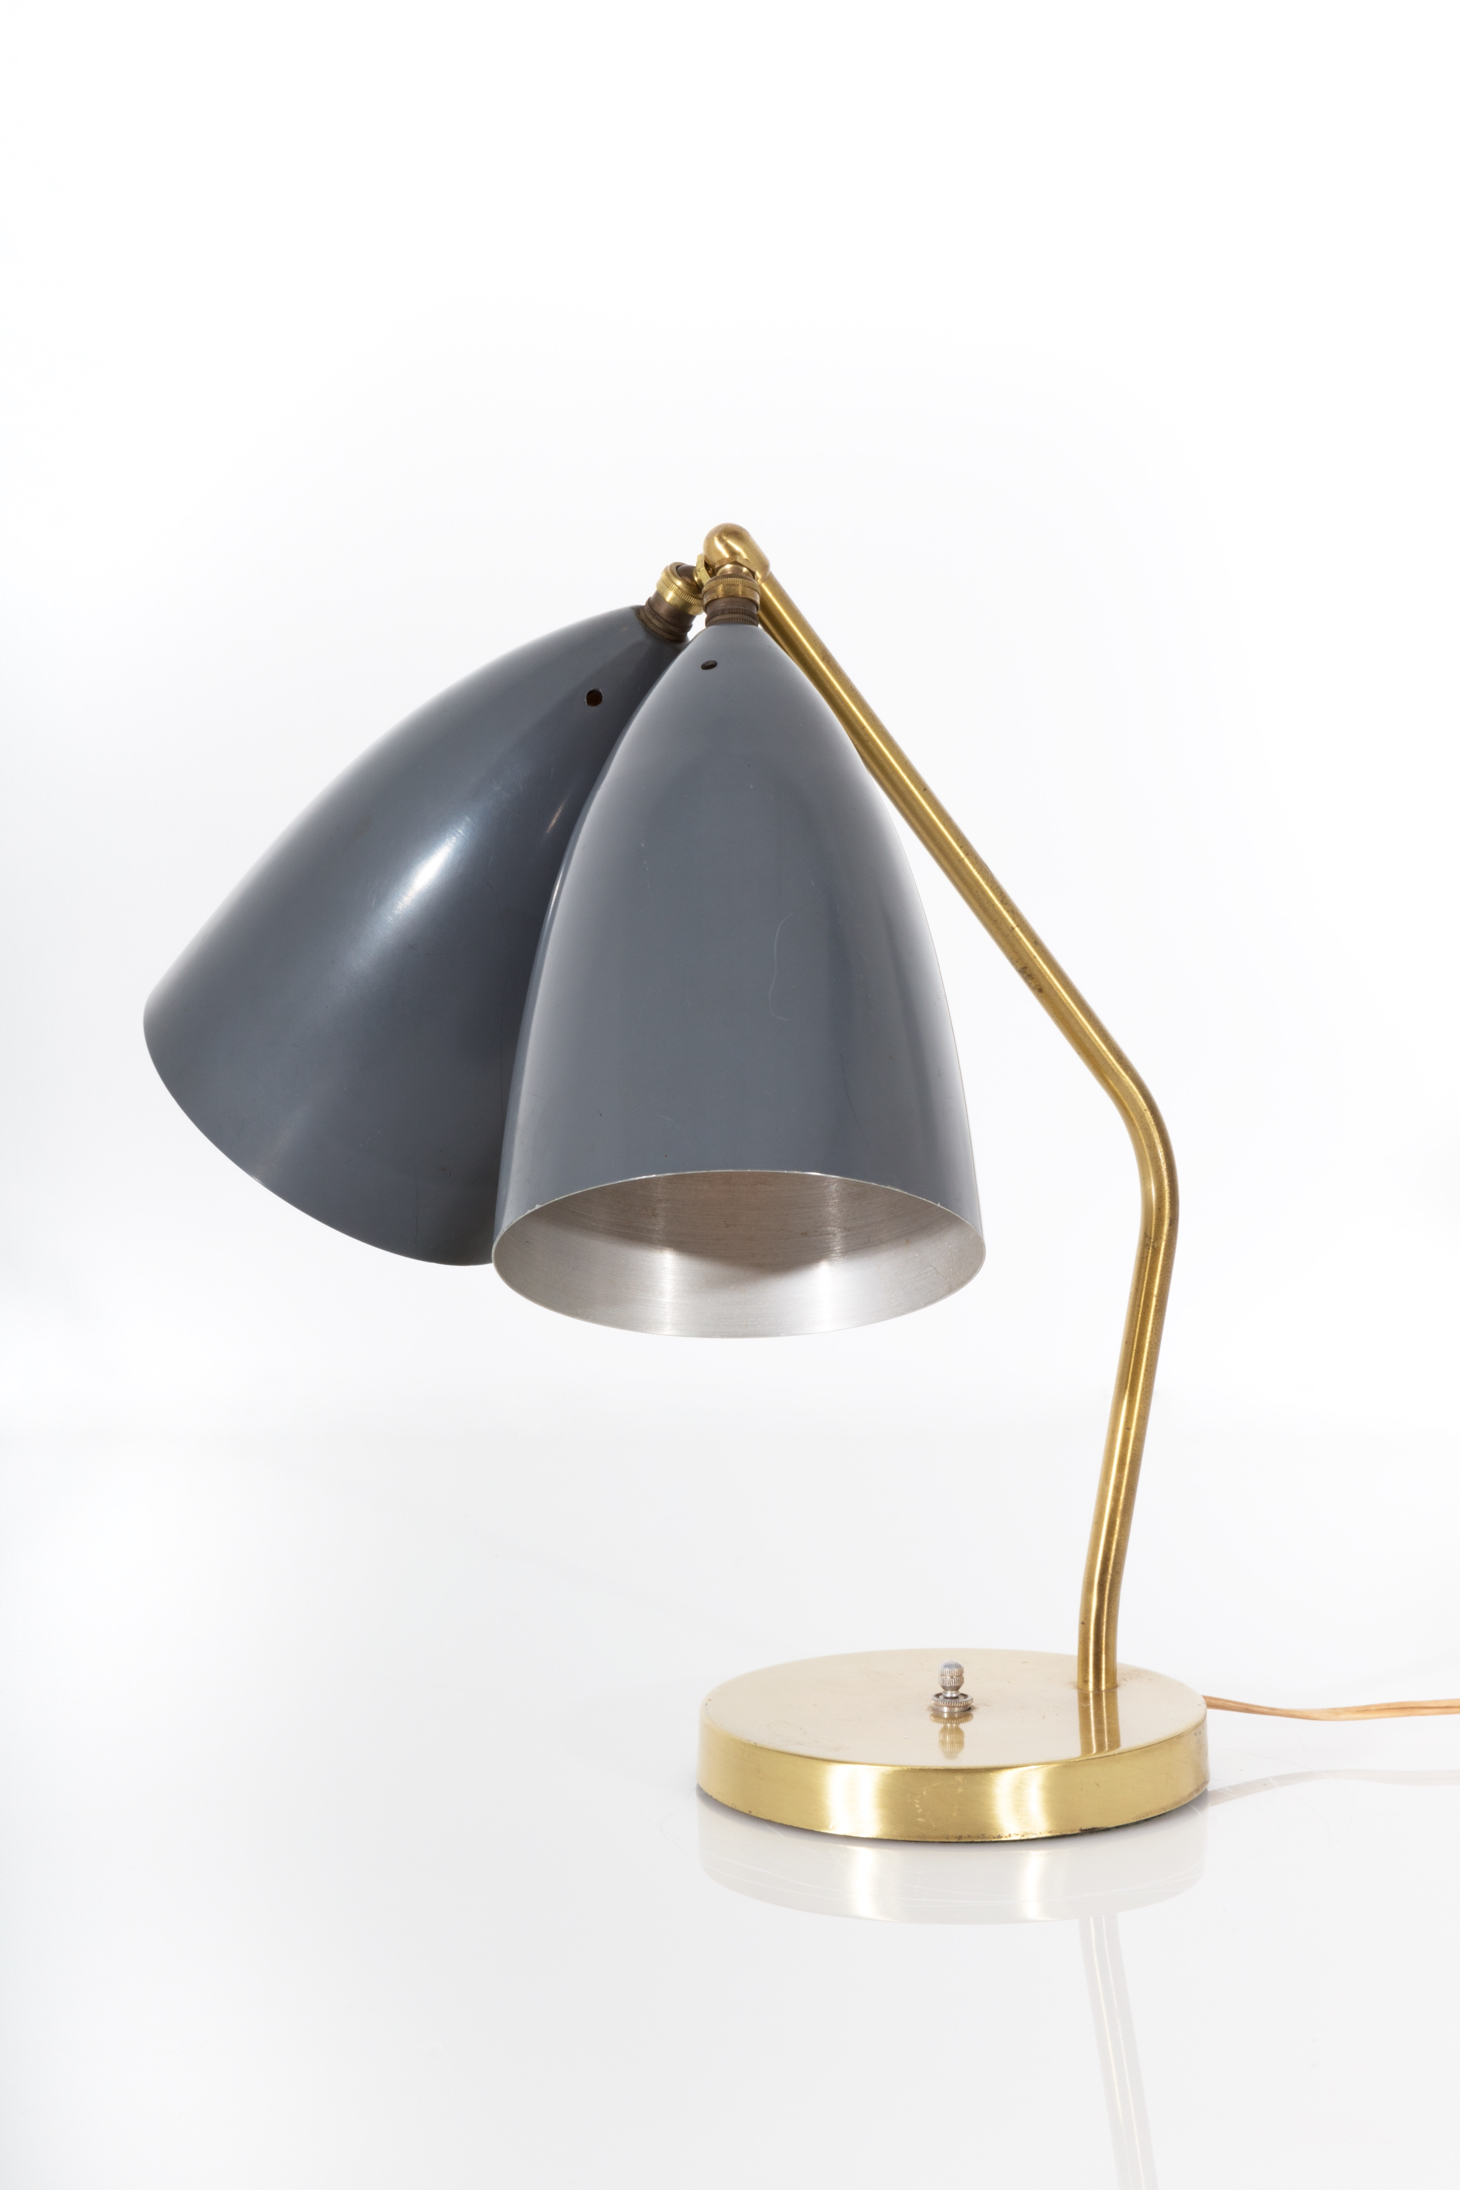 Magnificent Greta Magnusson Grossman Mid Century Lamp (Swe…